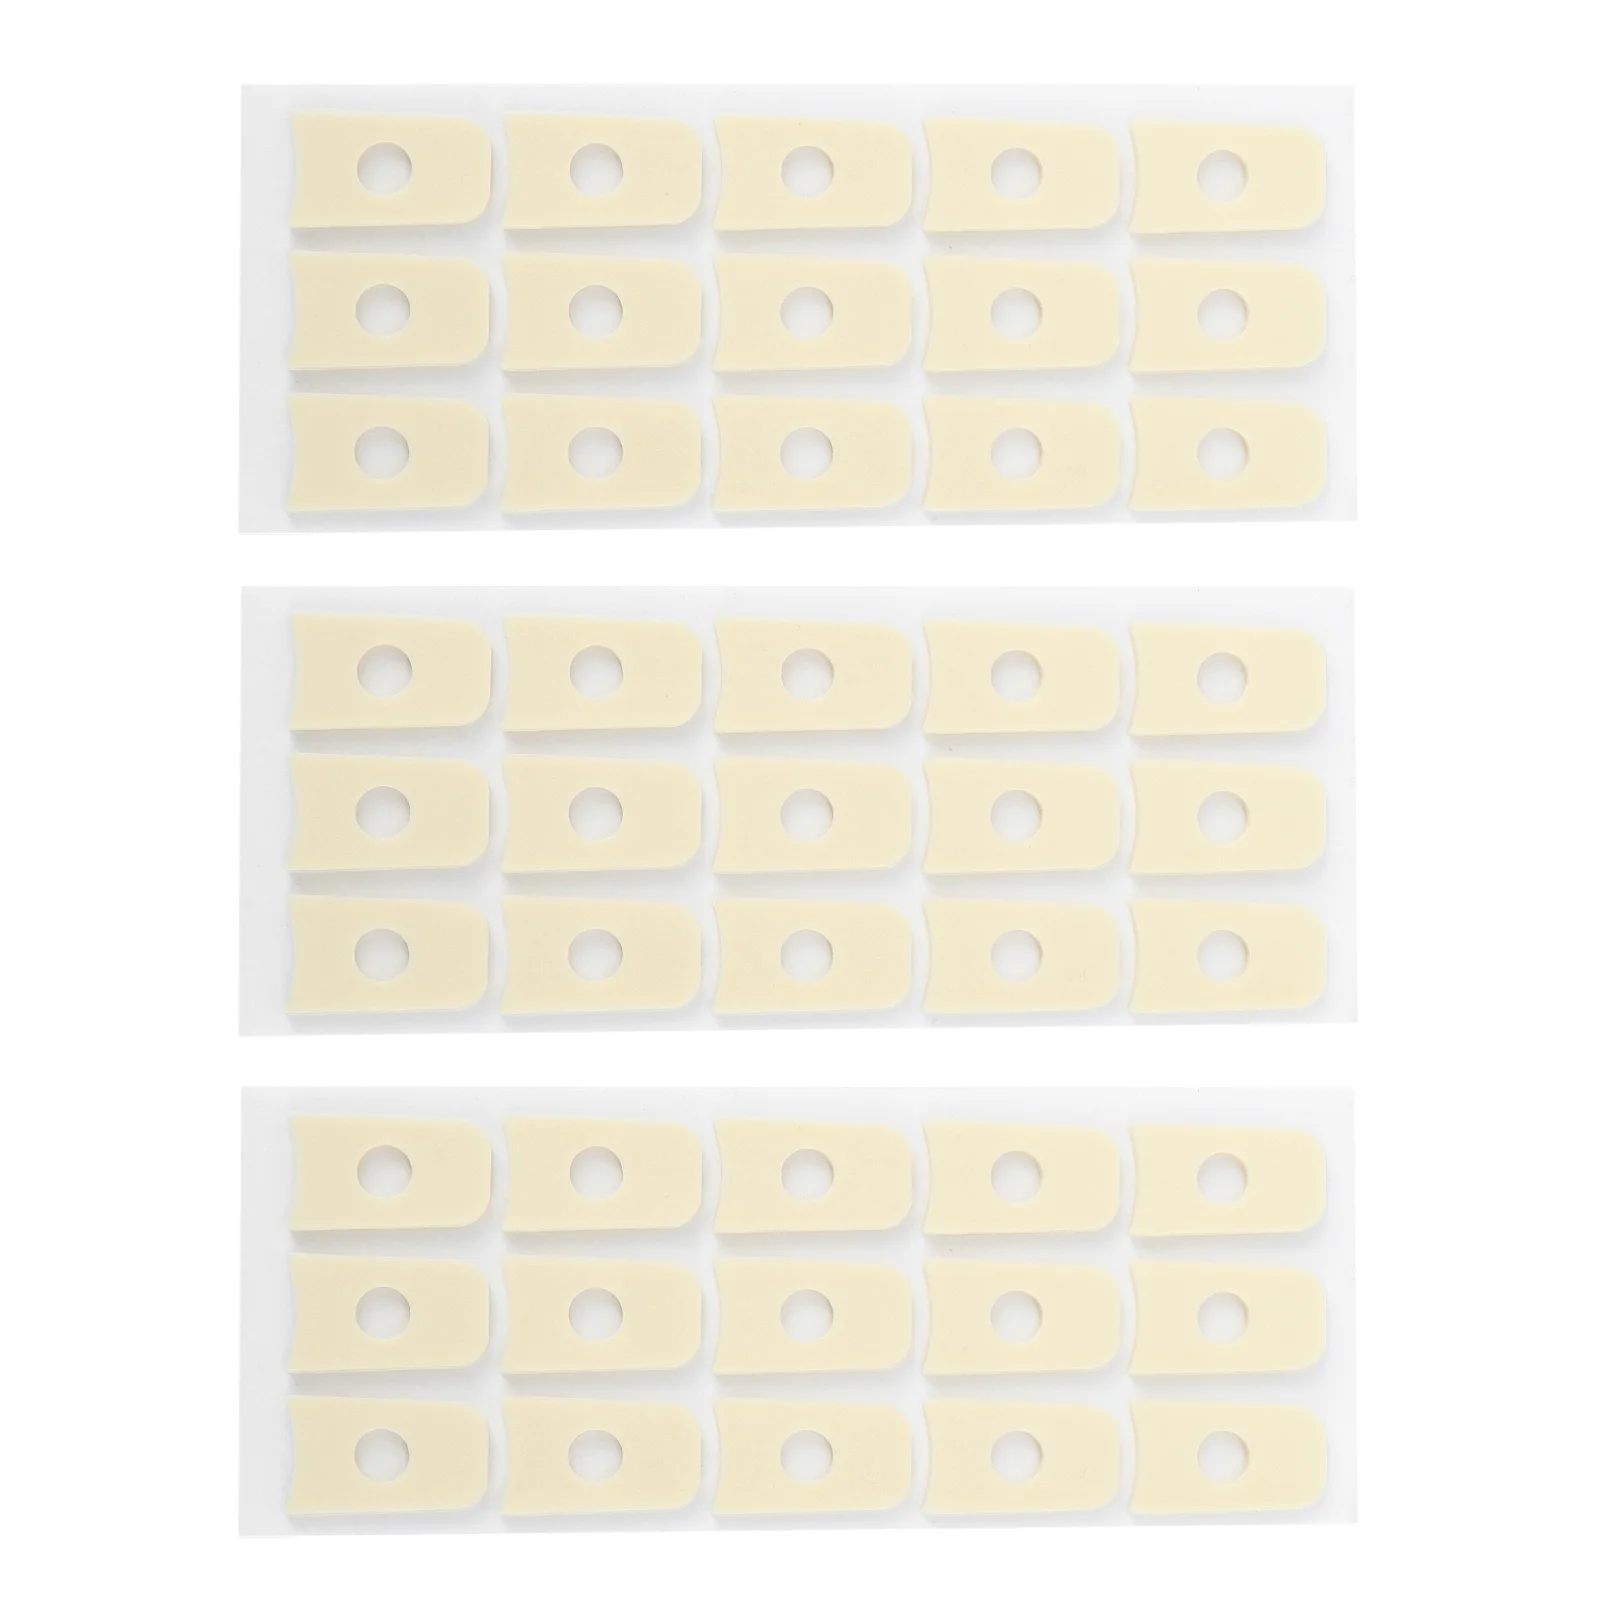 

45pcs Corn Cushions Toe Pads Self Adhesive Callus Cushions Bunion Corn Toe Protectors for Feet Toes